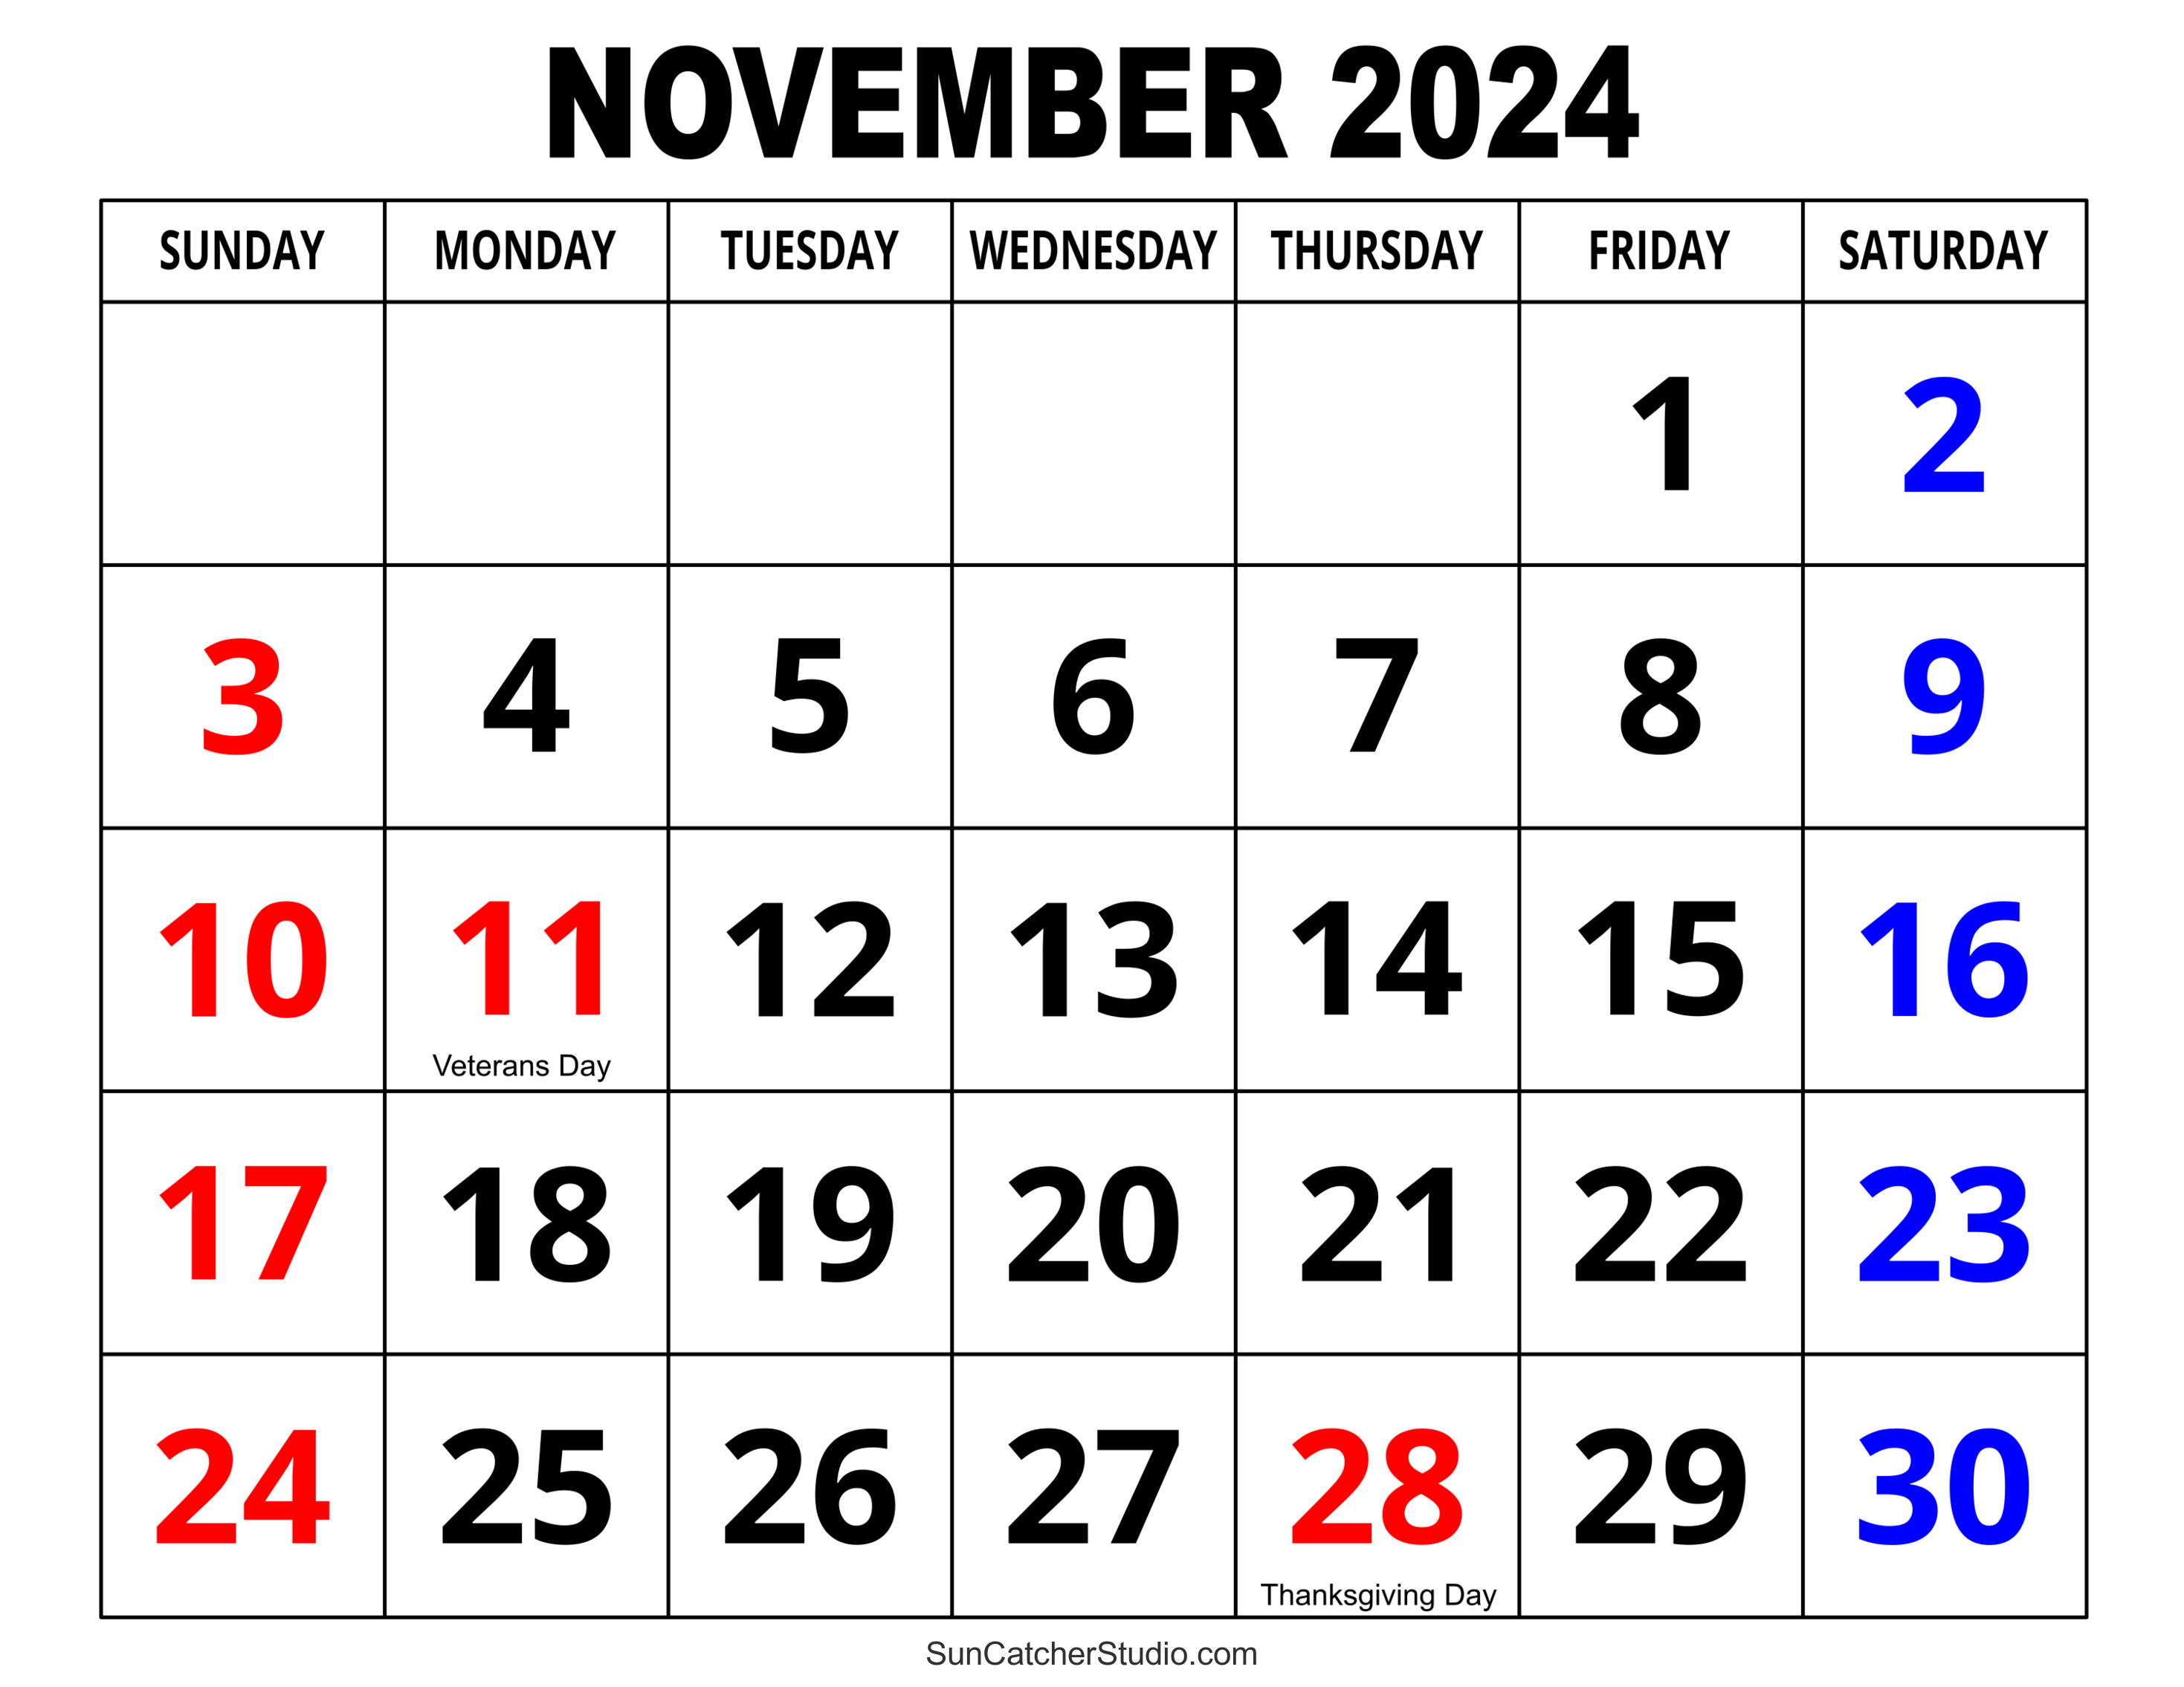 Thanksgiving Day 2024